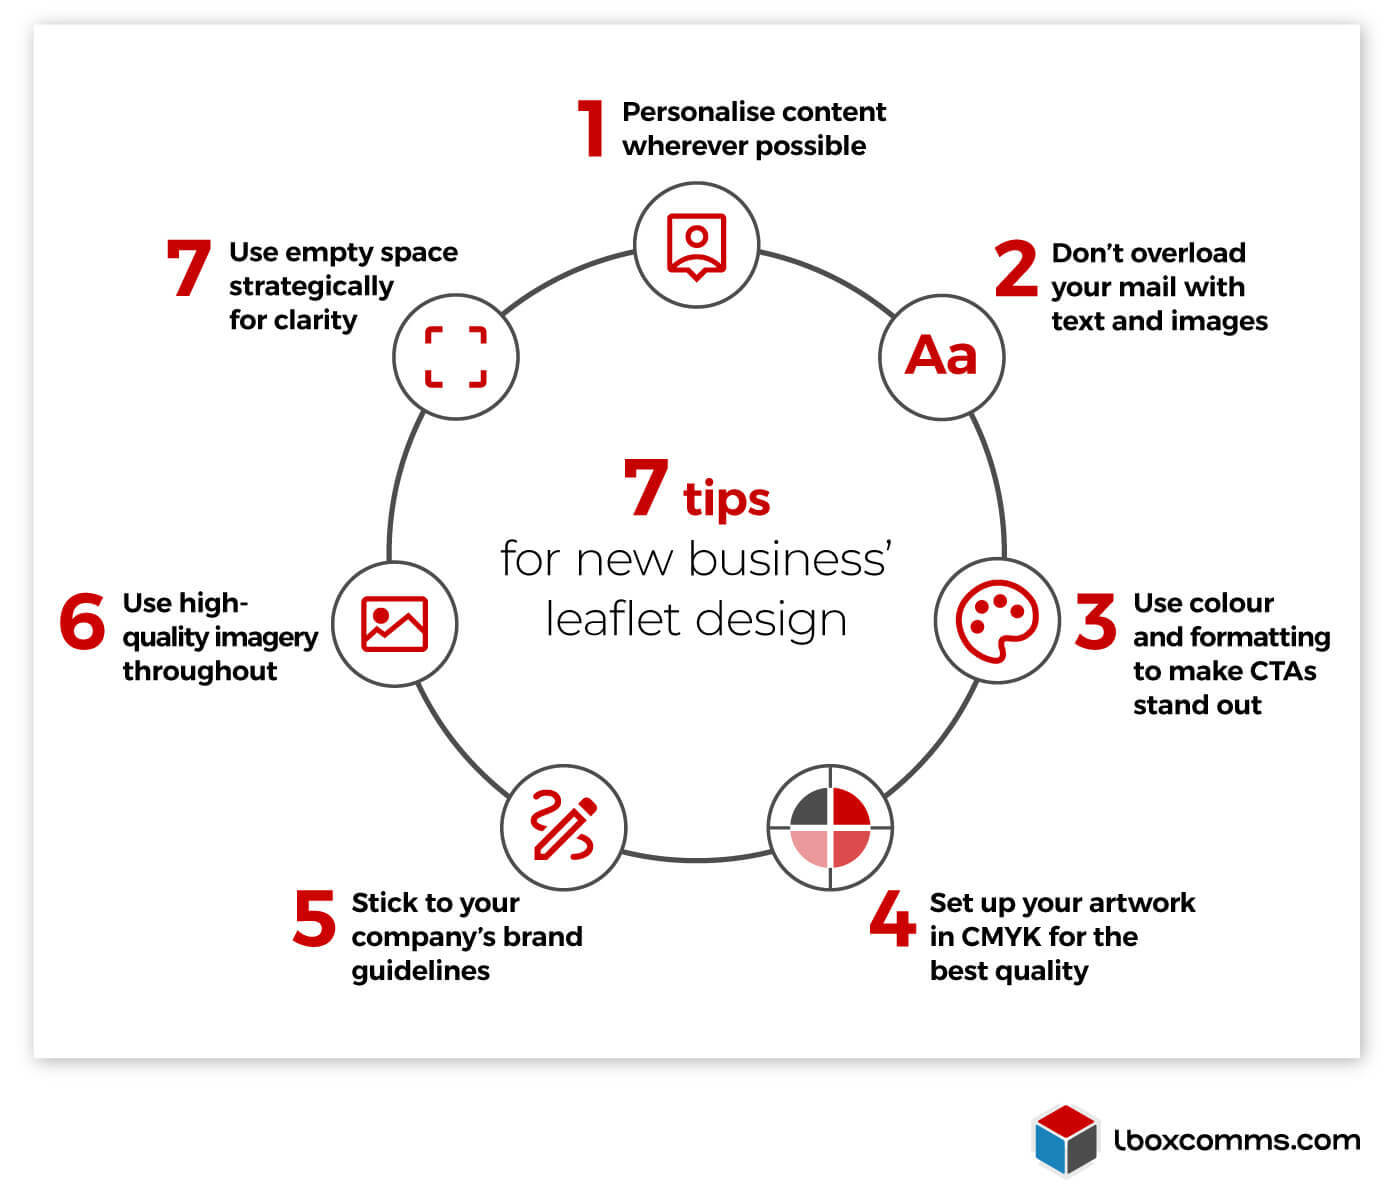 7 tips for new business leaflet design - Infographic image